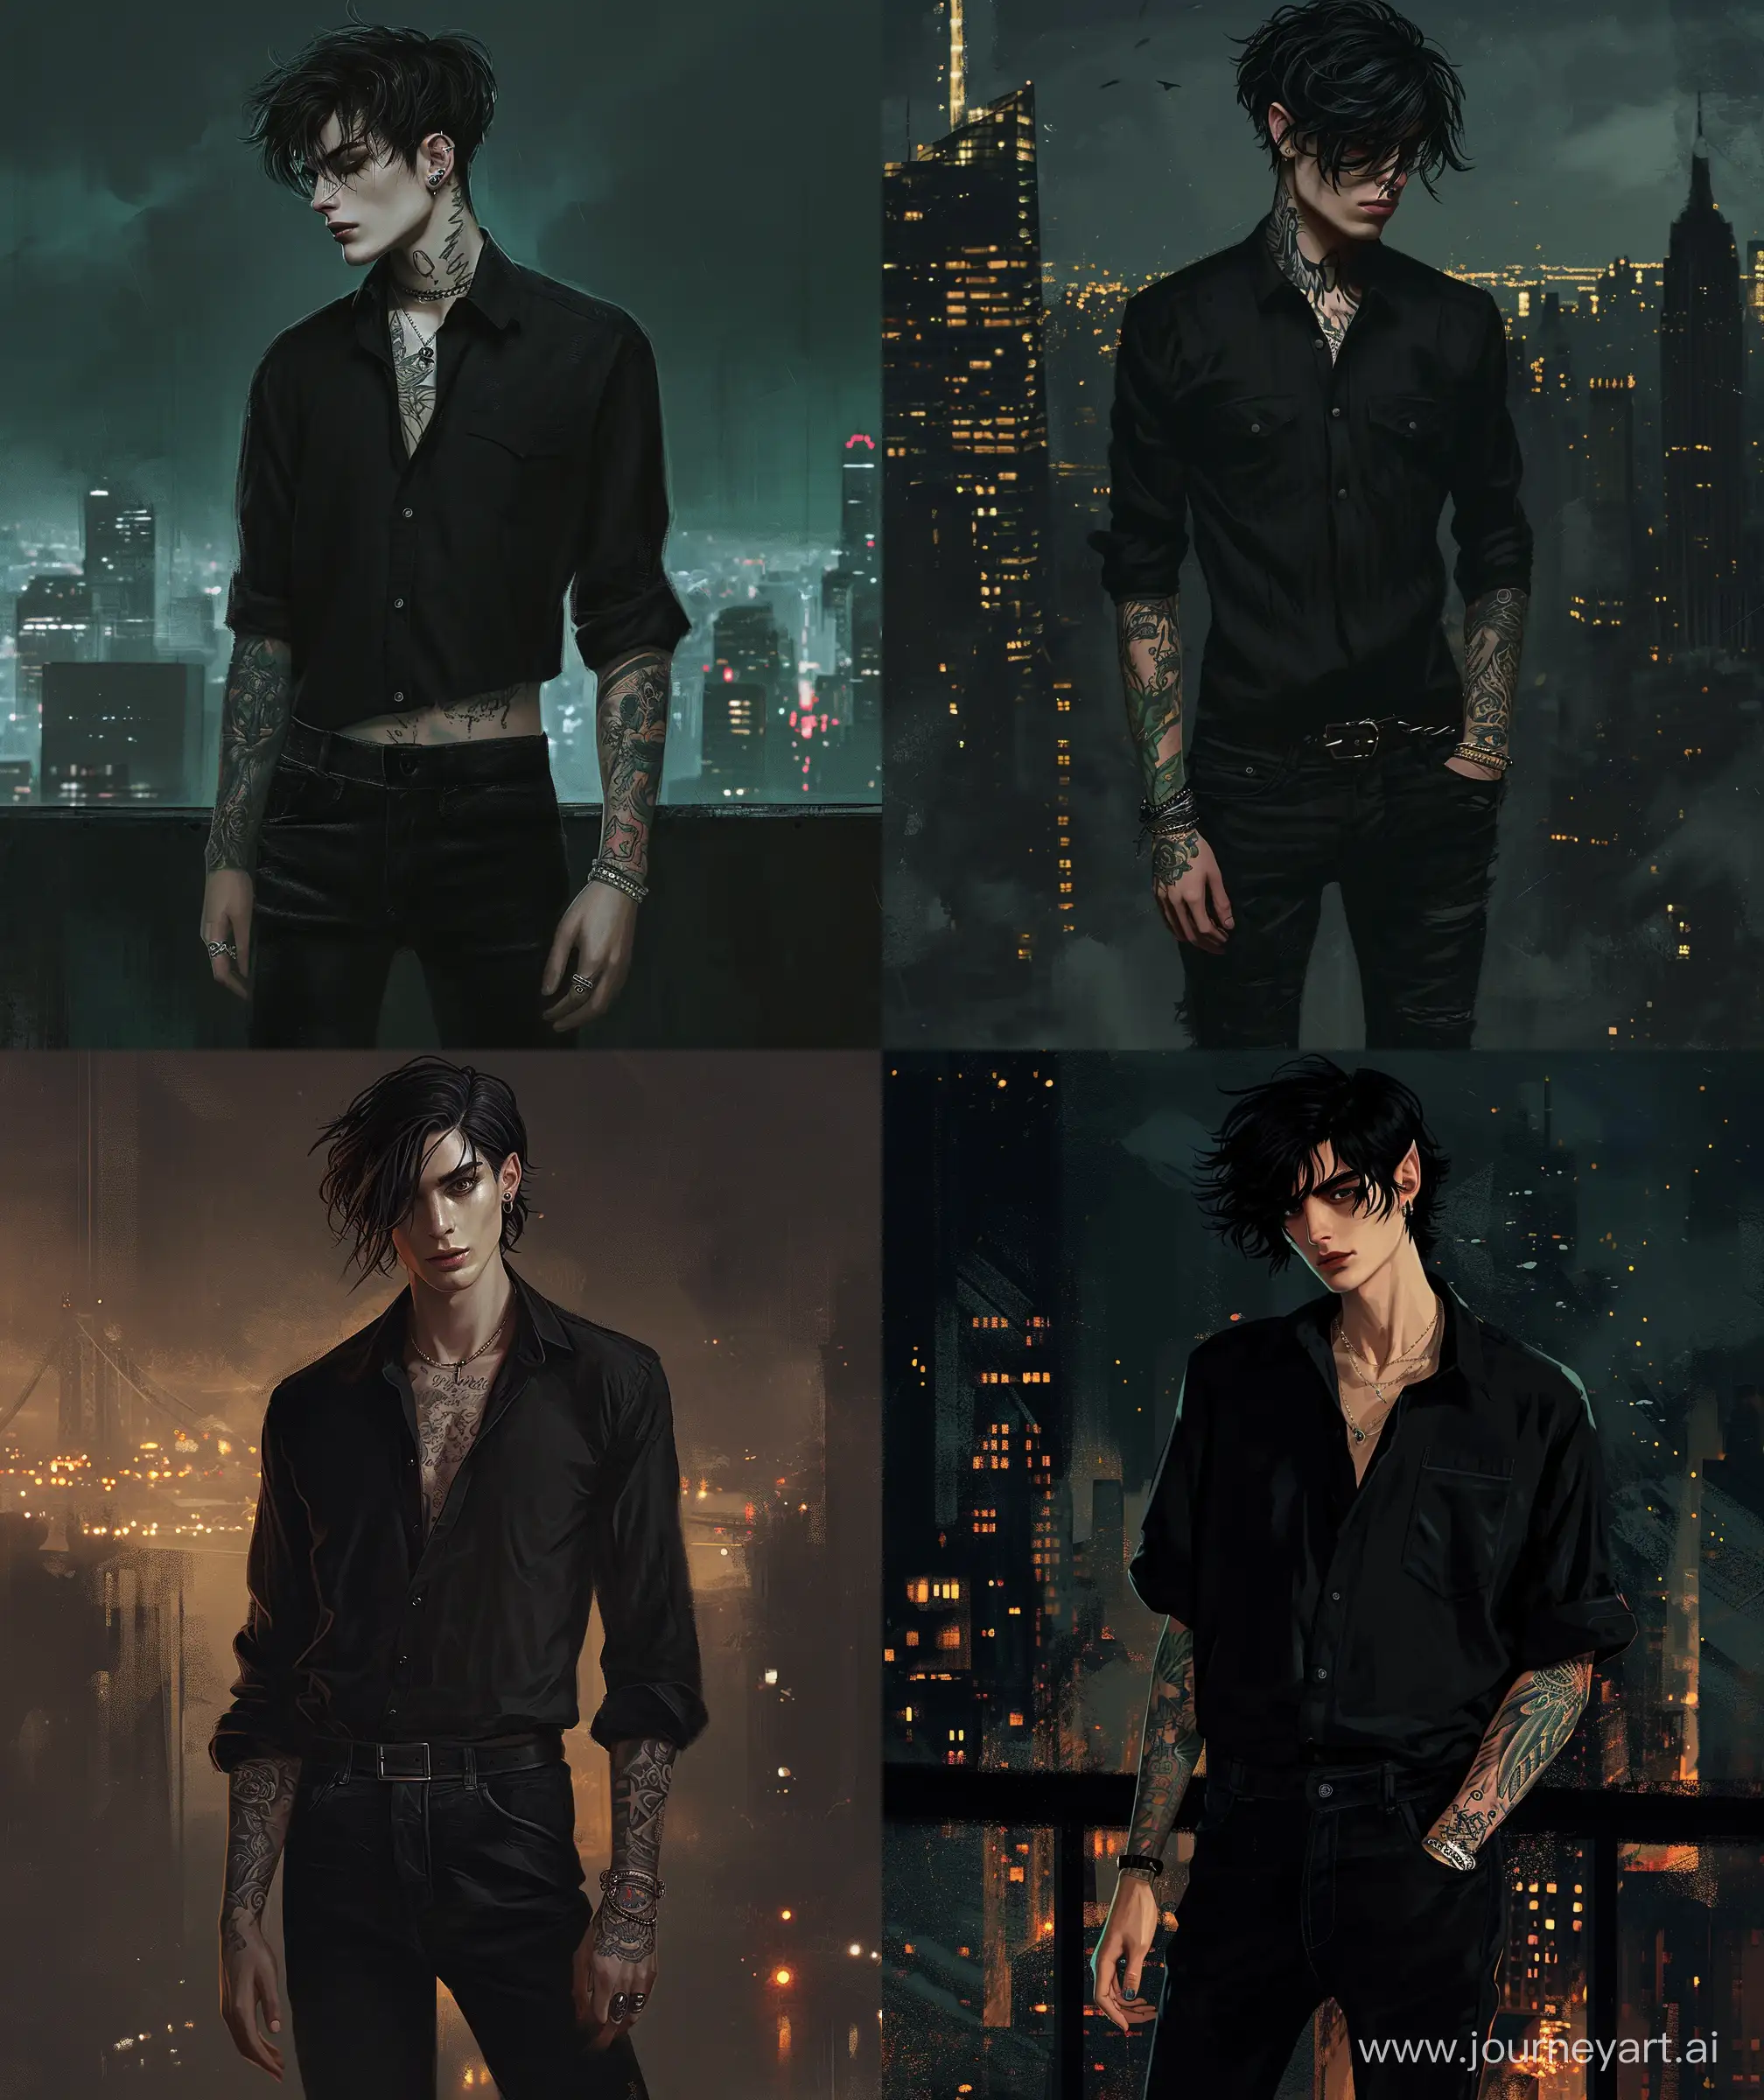 Stylish-Vampire-in-a-Dark-City-Hot-Male-Anime-Digital-Painting